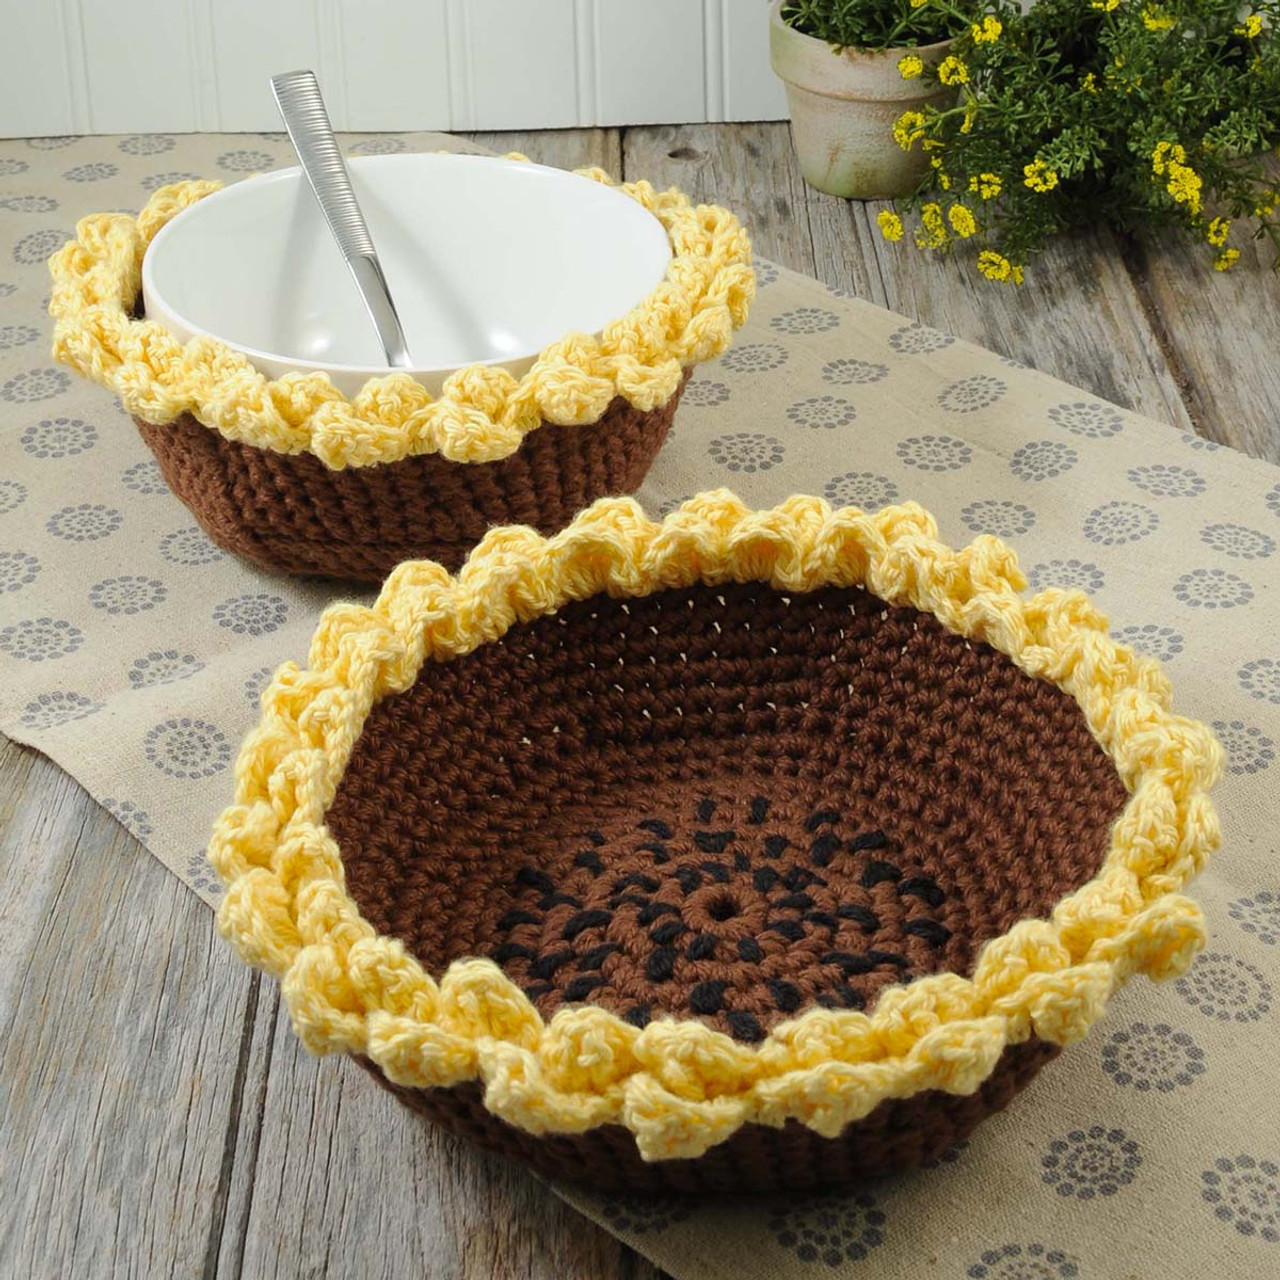 Sunflower Bowl Cozies Crochet Pattern Free Download